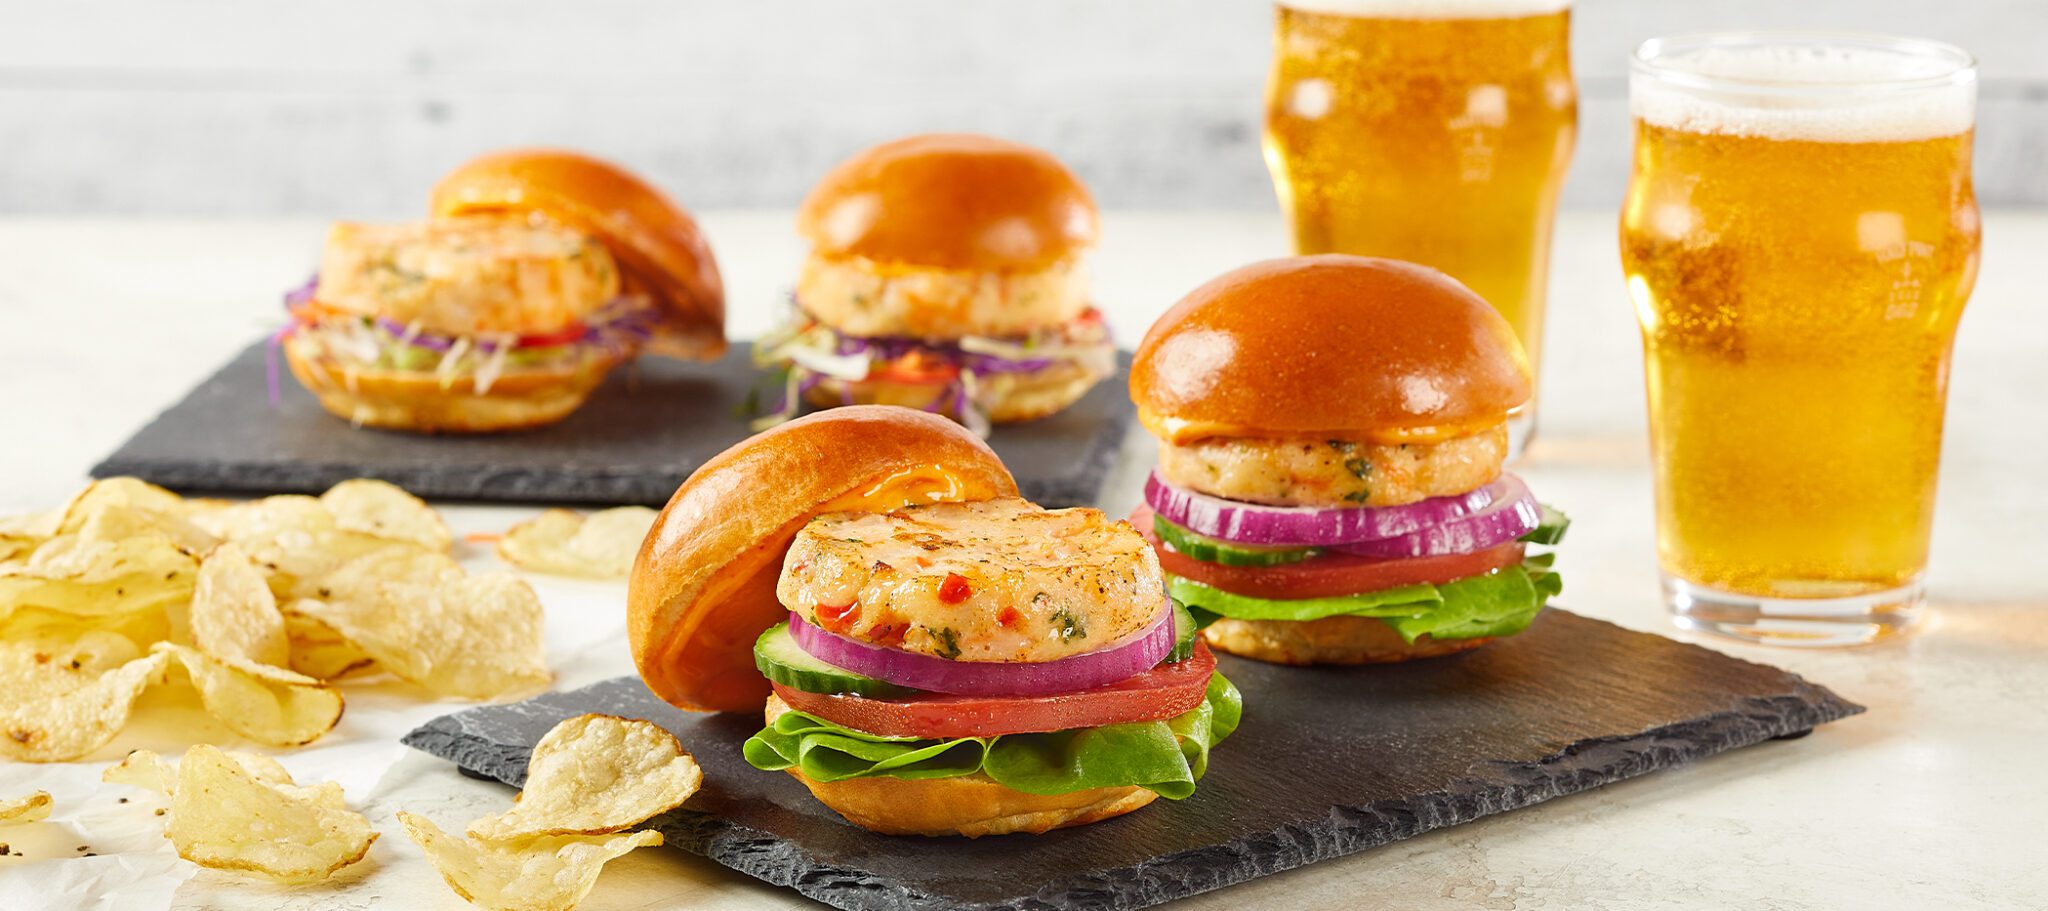 Social Kitchens Pro Premium Shrimp Sliders on a slate slab served with scattered potato chips and glasses of beer.